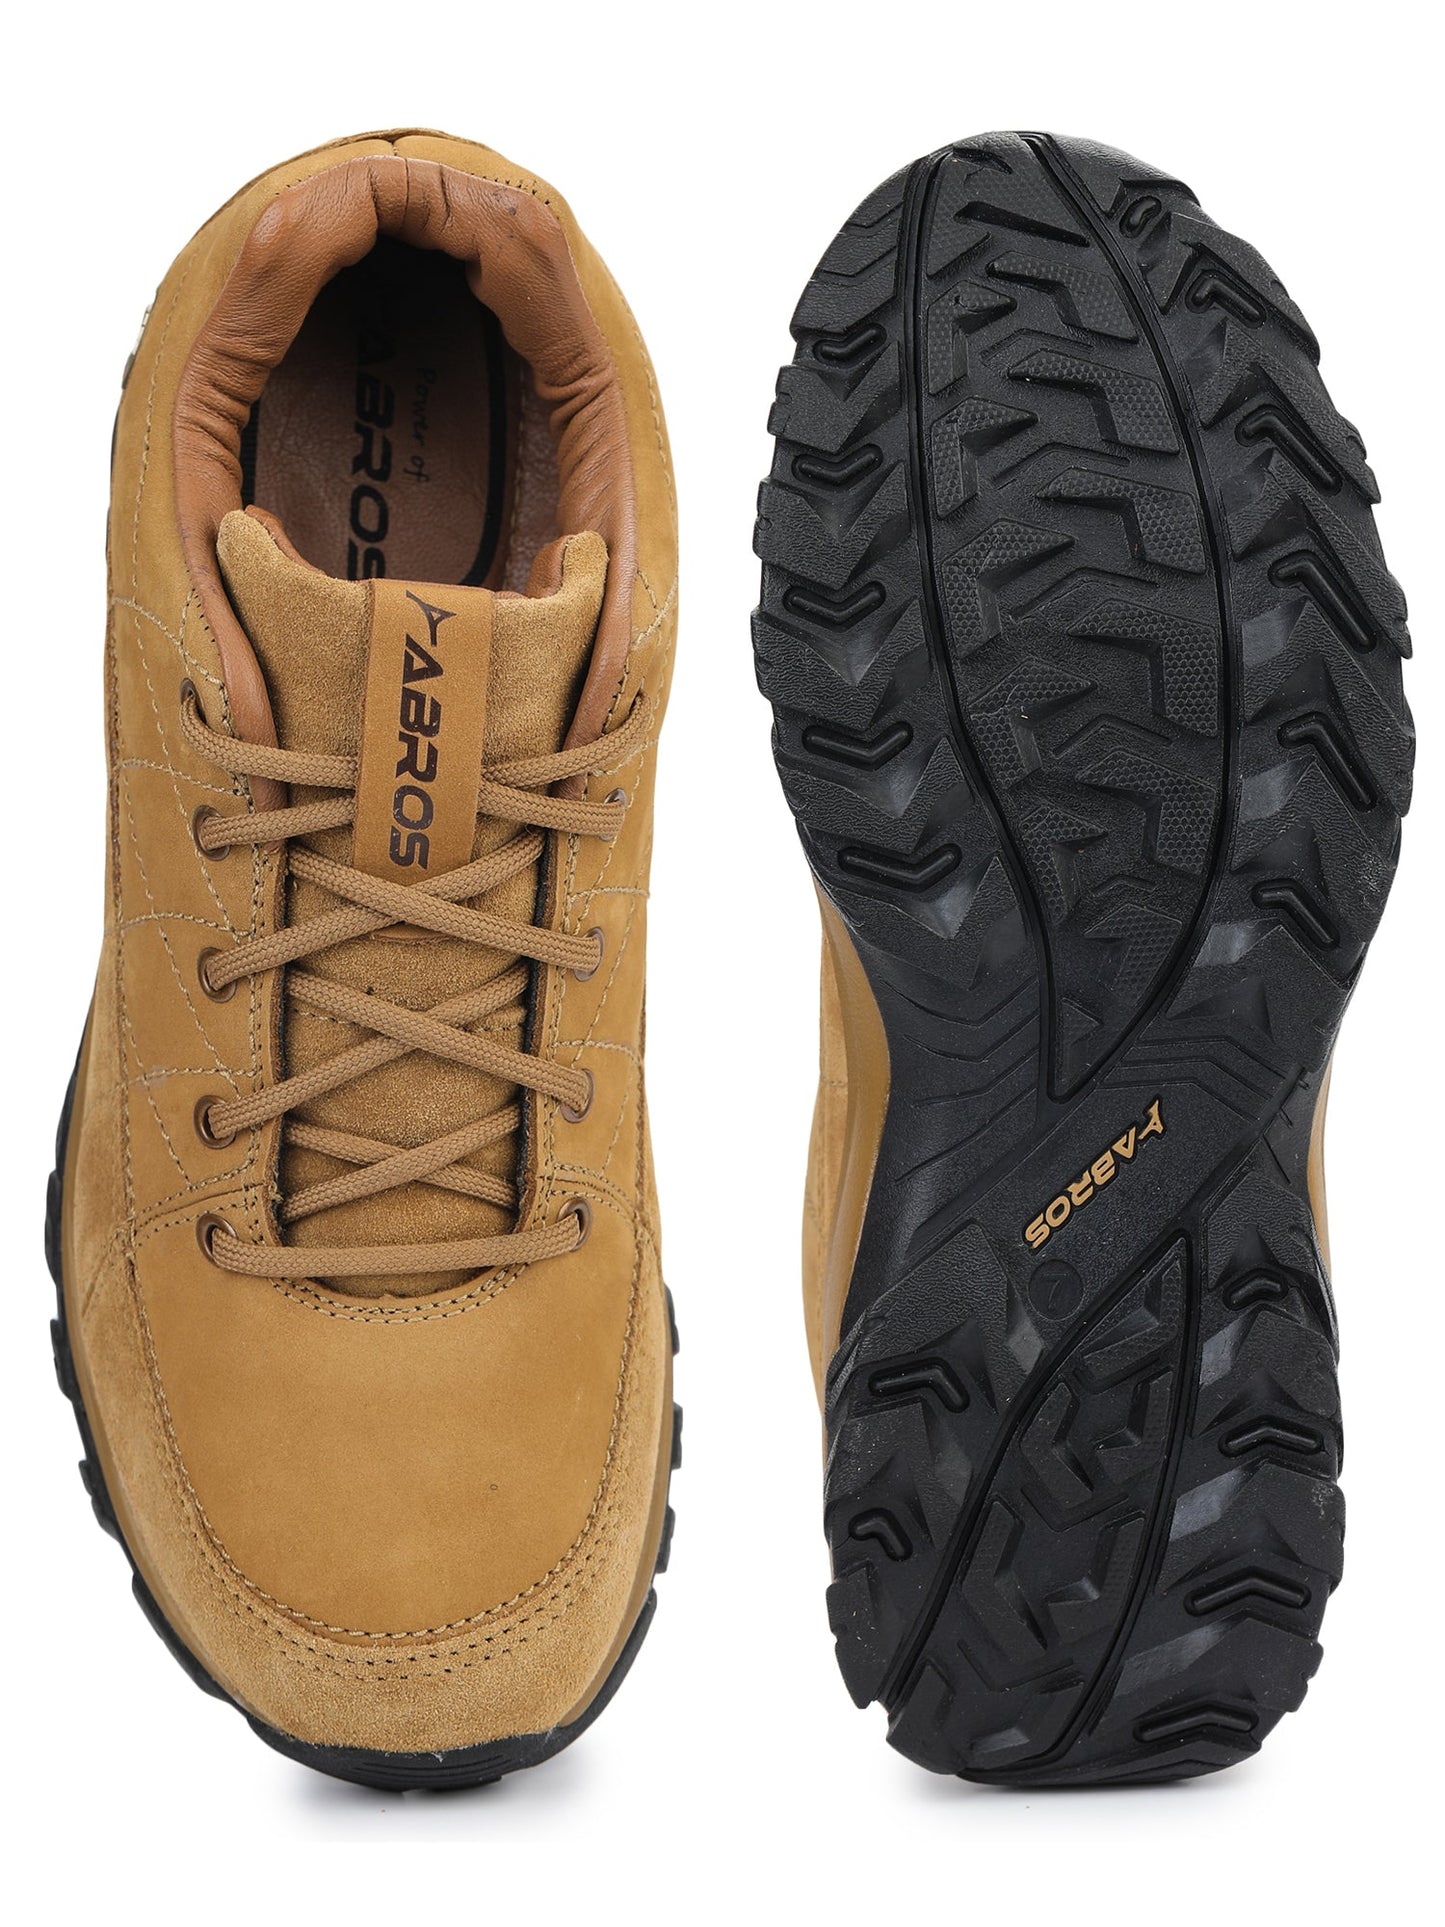 Nardoo Outdoor-Shoes For Men's